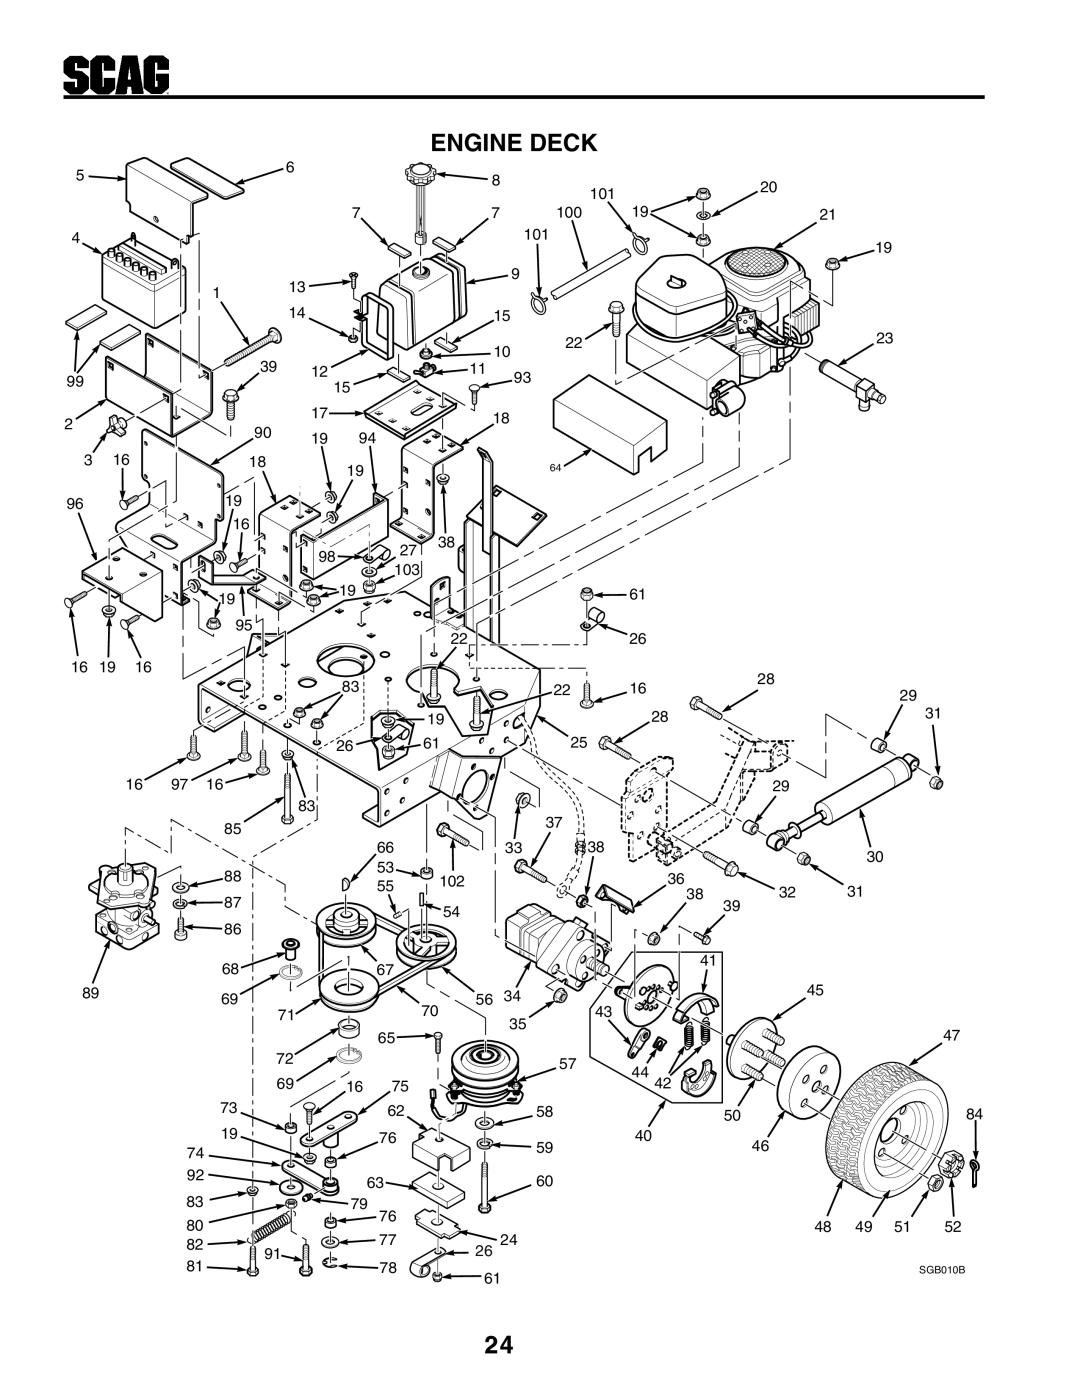 Scag Power Equipment STHM manual Engine Deck, 3832, SGB010B 